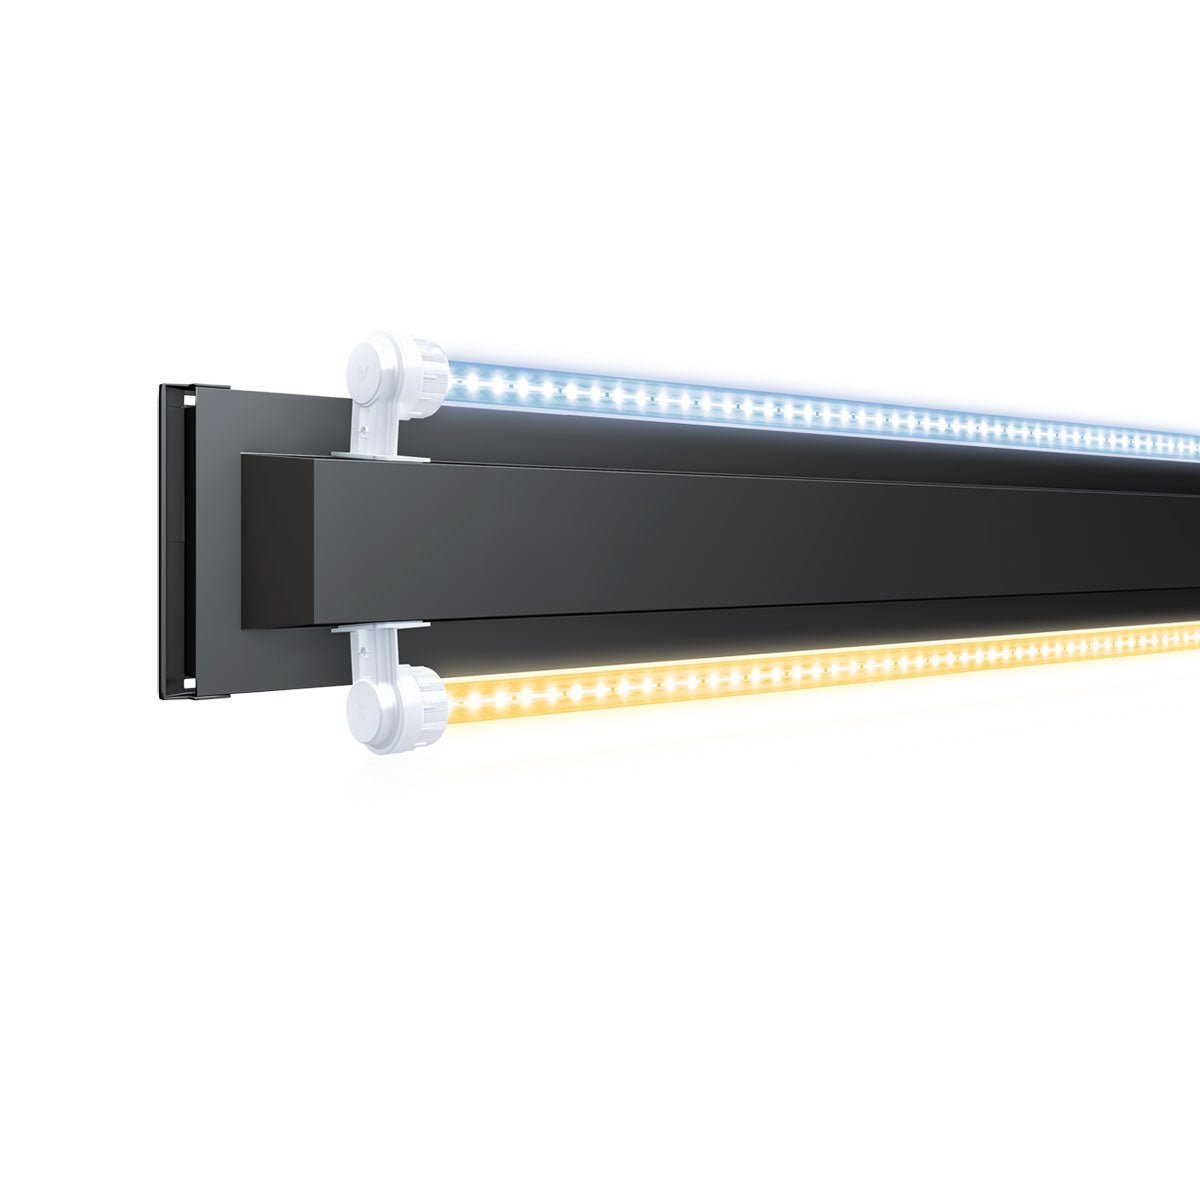 Juwel MultiLux LED Unit - 150cm - Charterhouse Aquatics